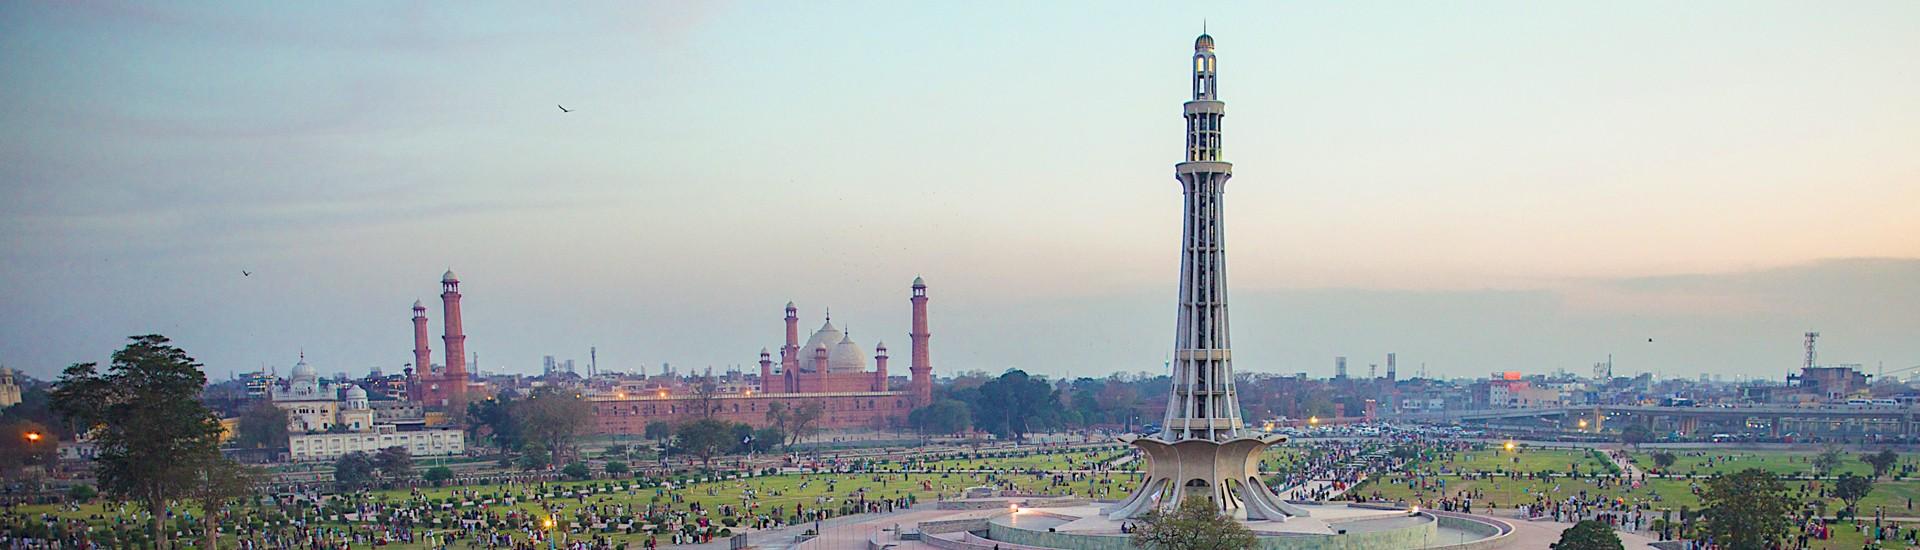 The Minar-e-Pakistan monument